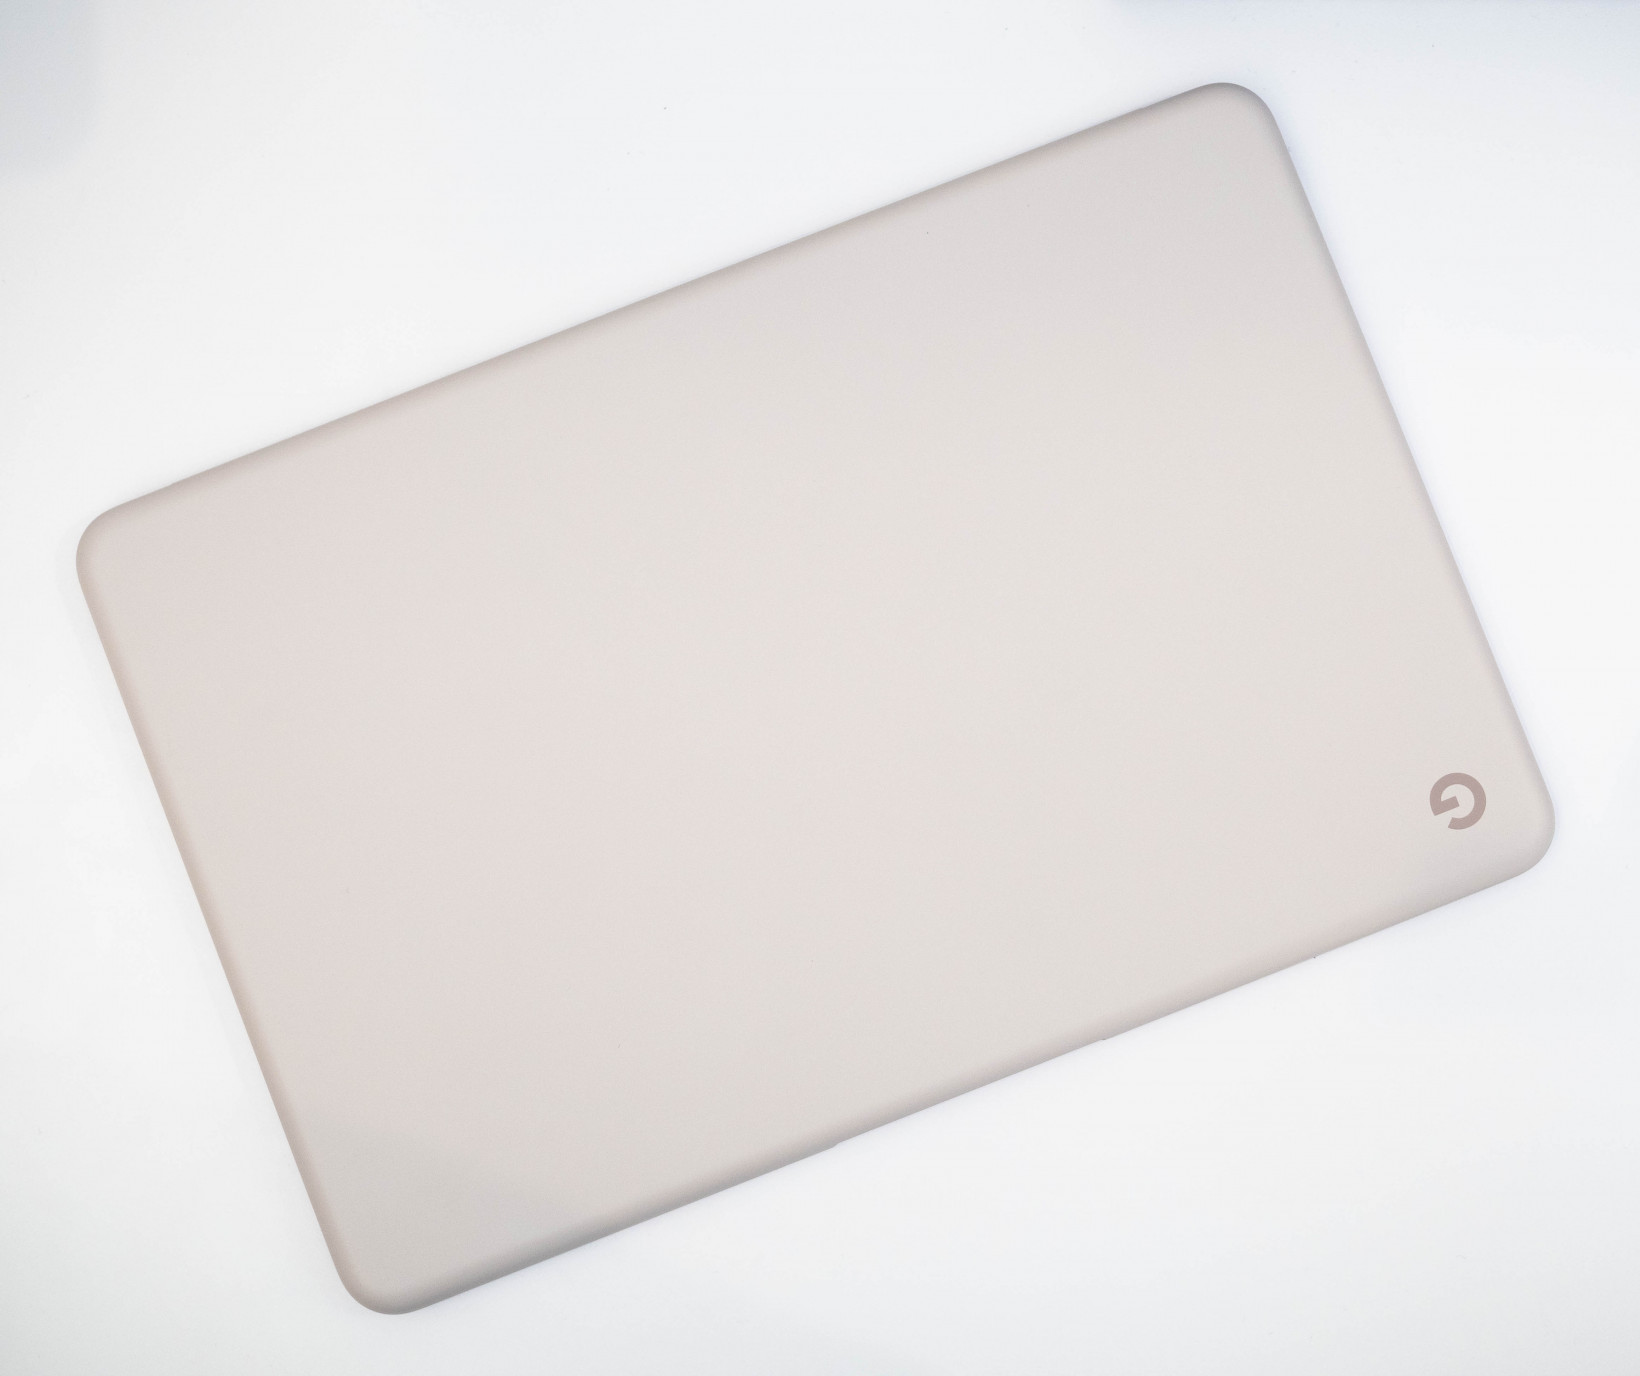 Hands-on: Google’s Pixelbook Go feels way fancy for a $649 laptop